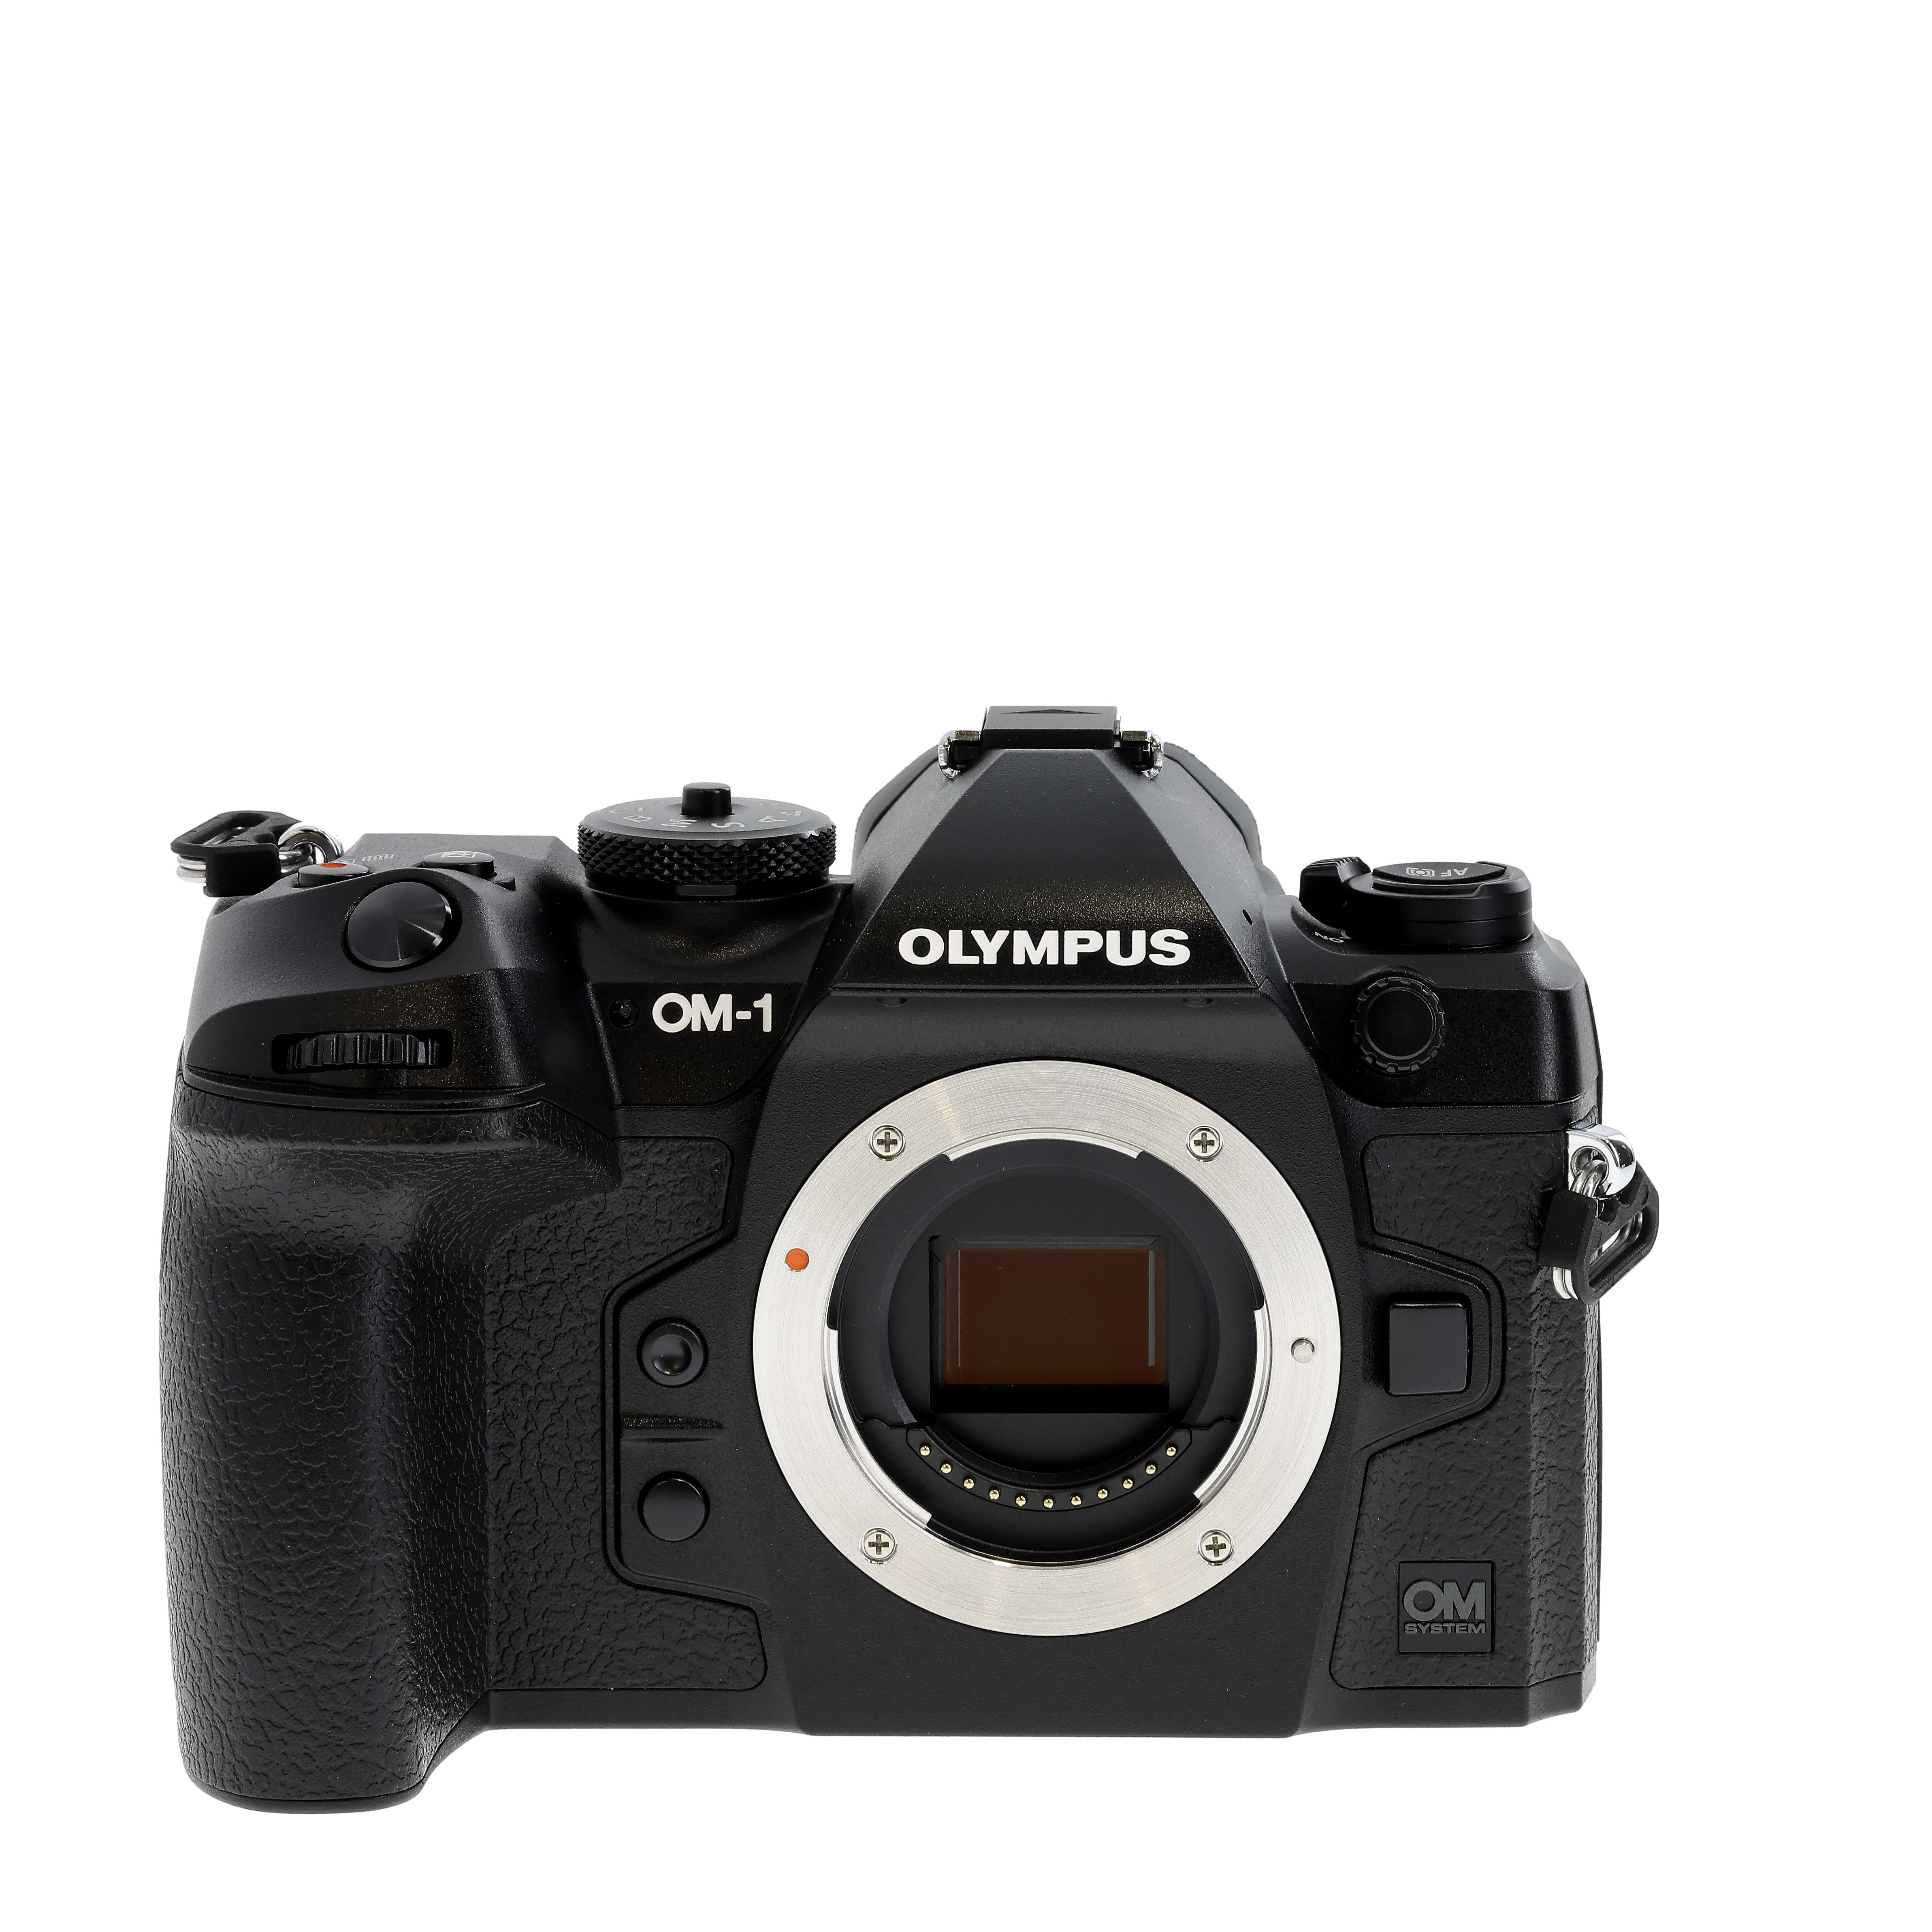 Olympus OM-D E-M10 Mark IV Mirrorless MFT (Micro Four Thirds) Camera Body,  Silver {20.3MP} at KEH Camera